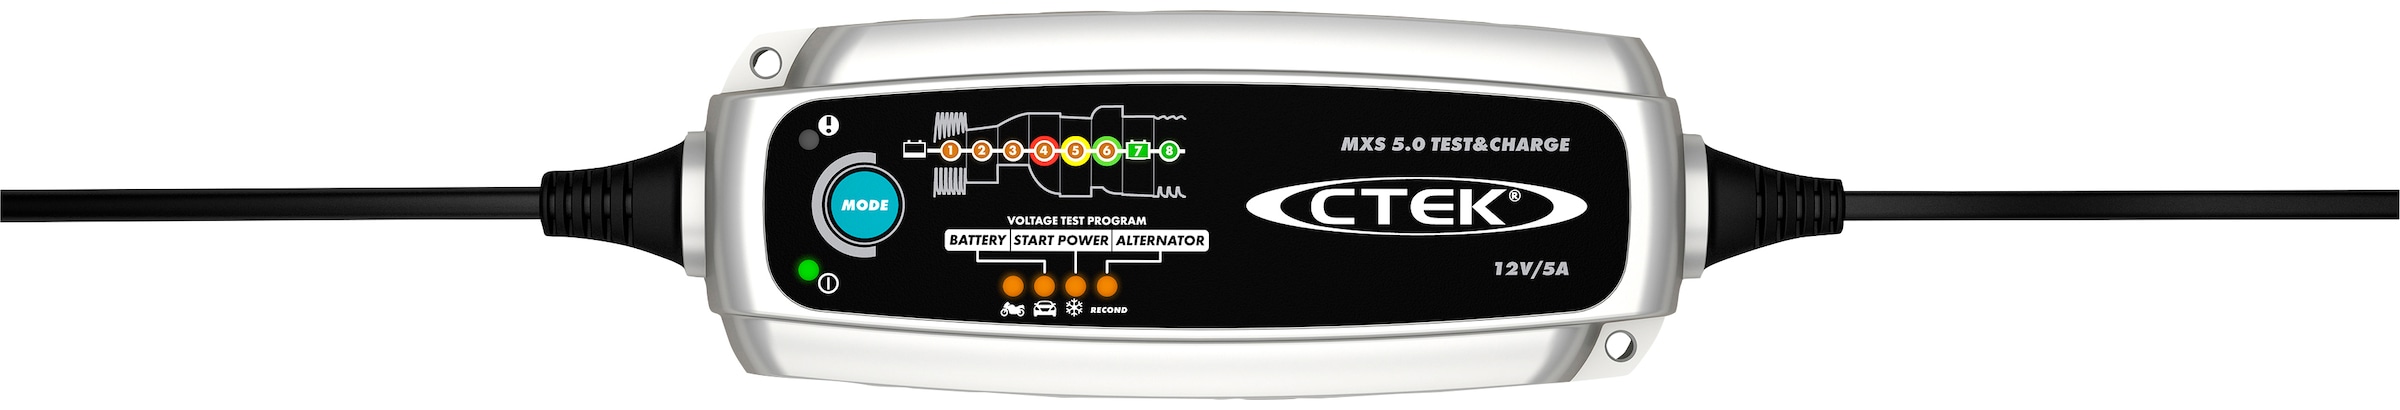 CTEK Batterie-Ladegerät »MXS 5.0 Test & Charge«, Spannung